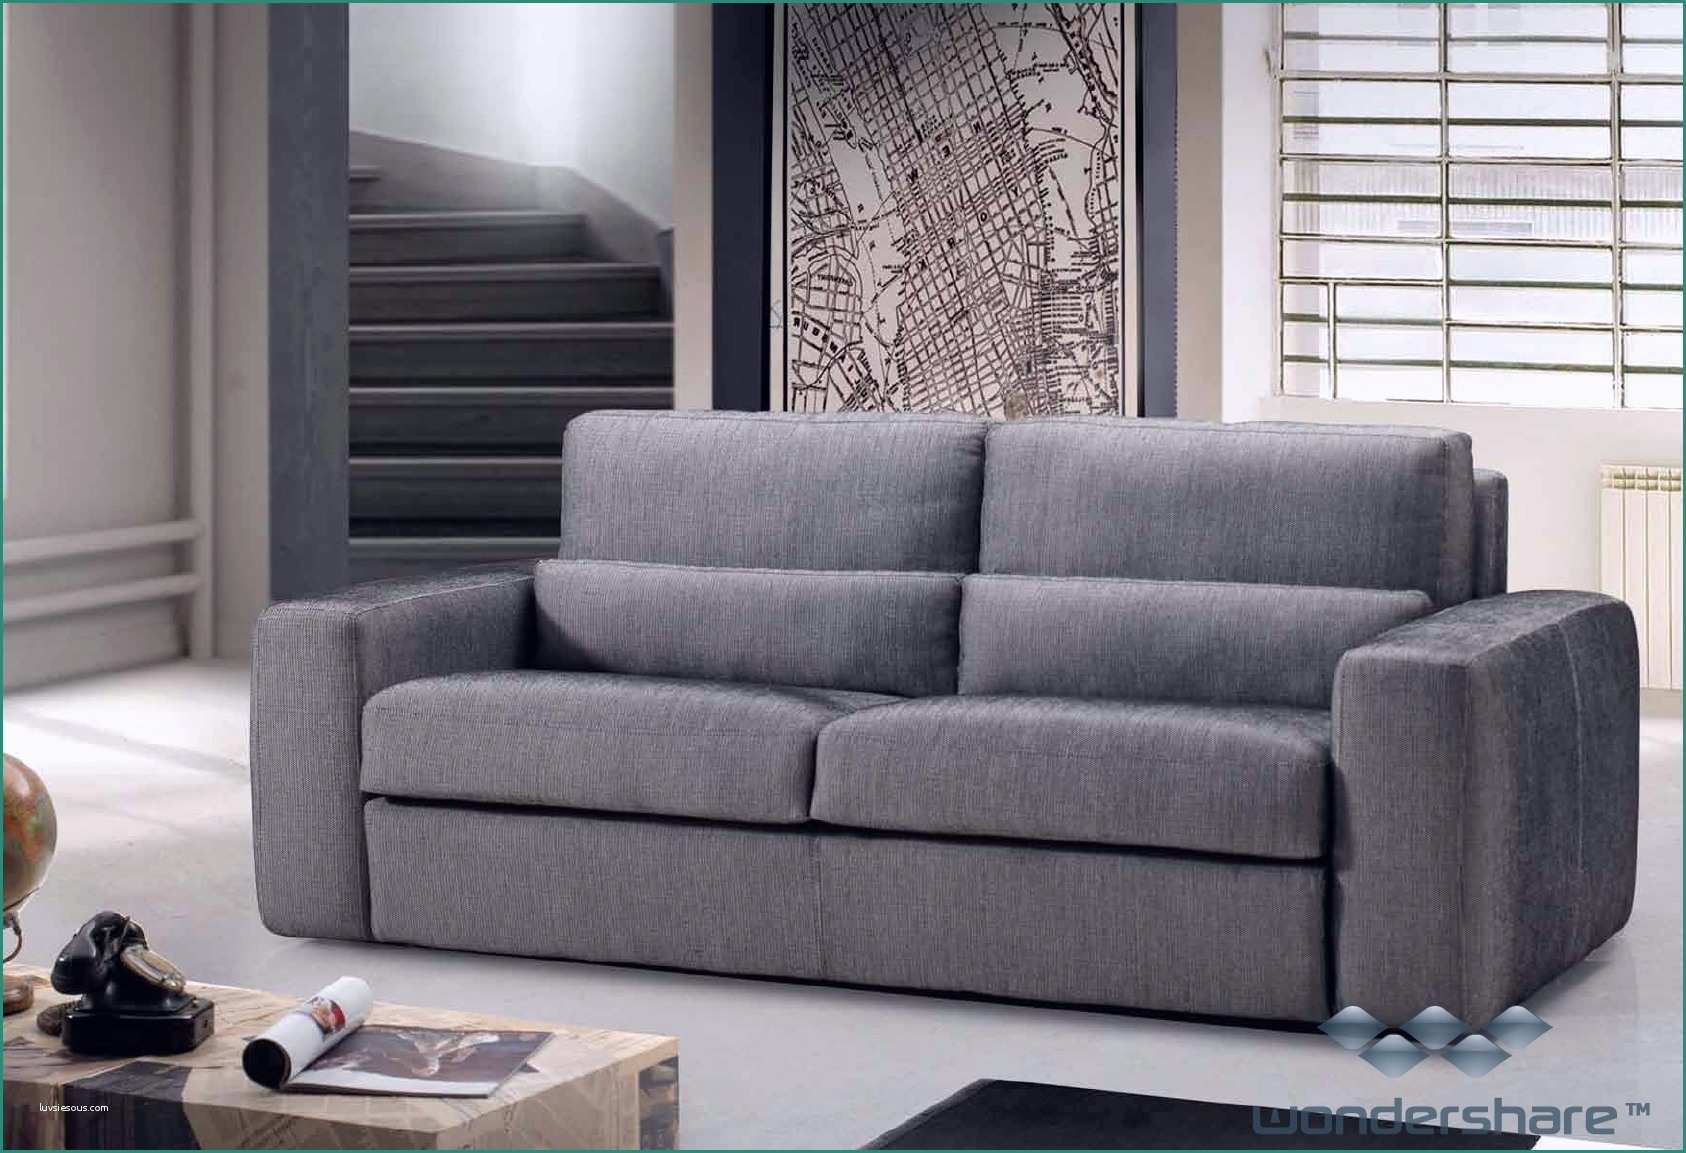 Divani Reggio Emilia E Tanghetti Divani House solutions Pinterest Furniture Upholstery